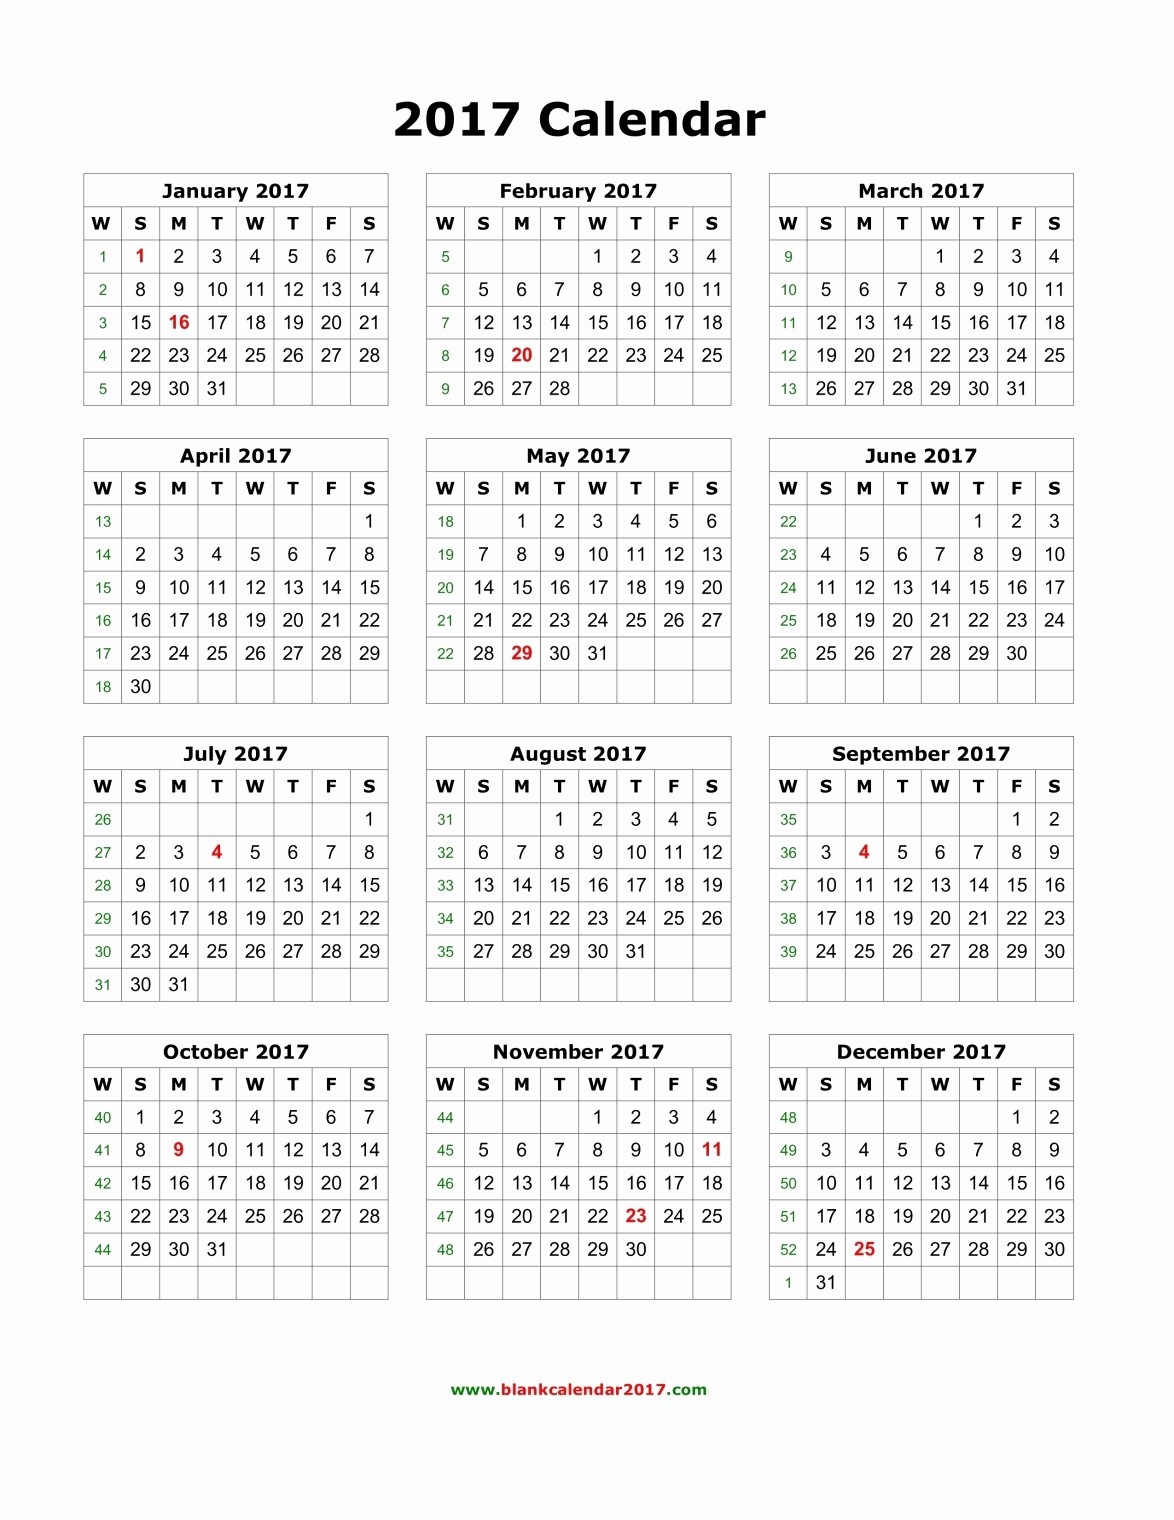 Excel Calendar 2017 with Holidays Fresh April 2017 Calendar Excel